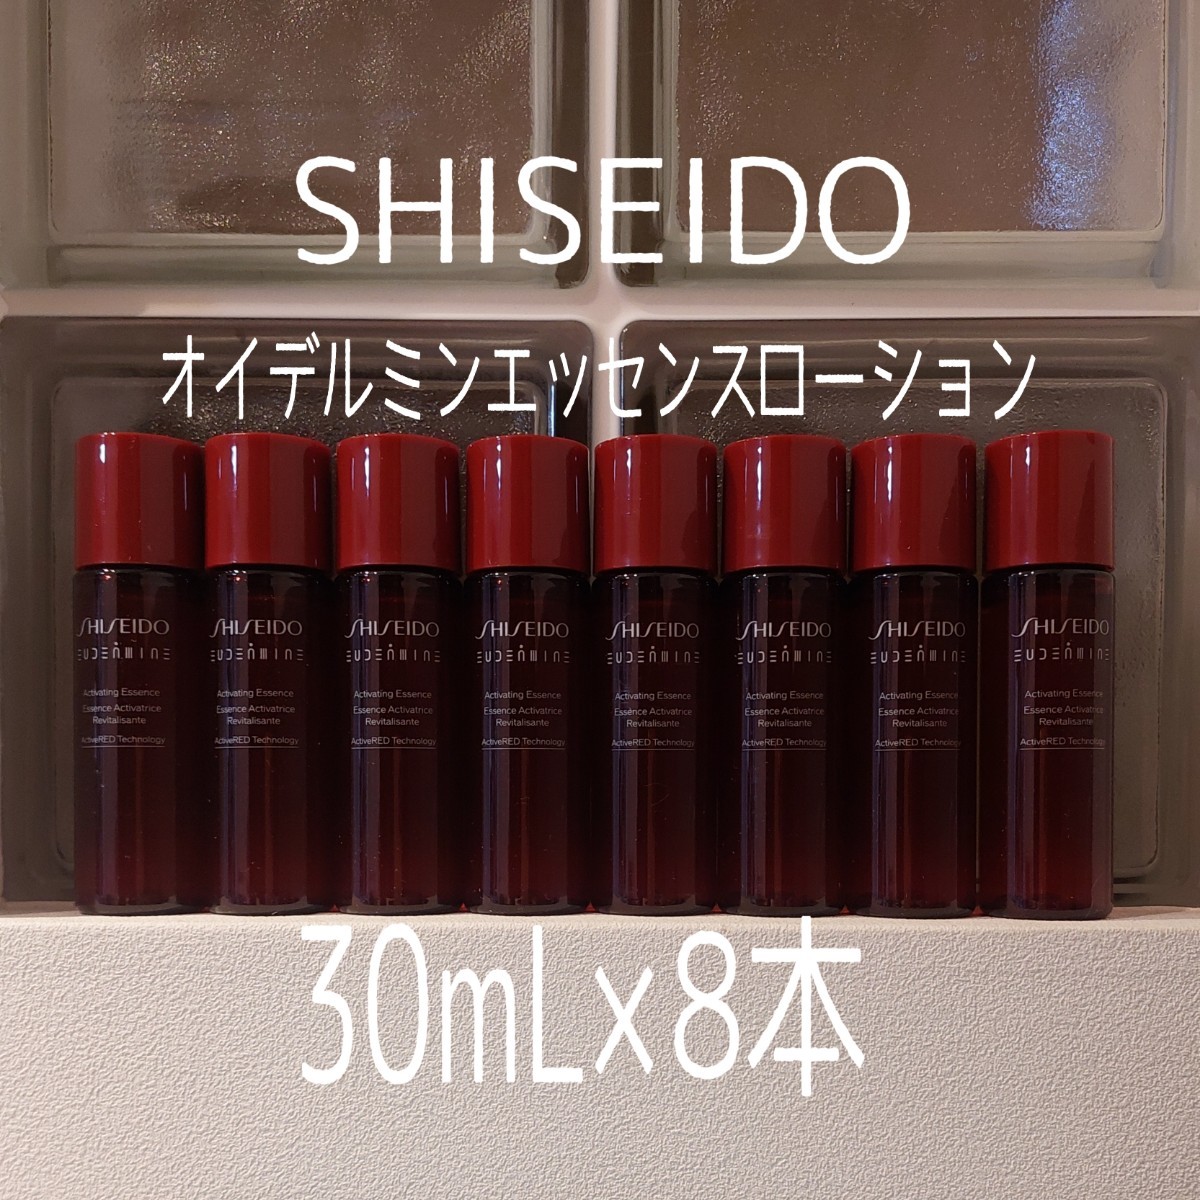 SHISEIDO*oi Dell min essence lotion 30ml×8ps.@*SHISEIDO*VOCE appendix * Shiseido * Ishii beautiful guarantee * cosmetics fluid *